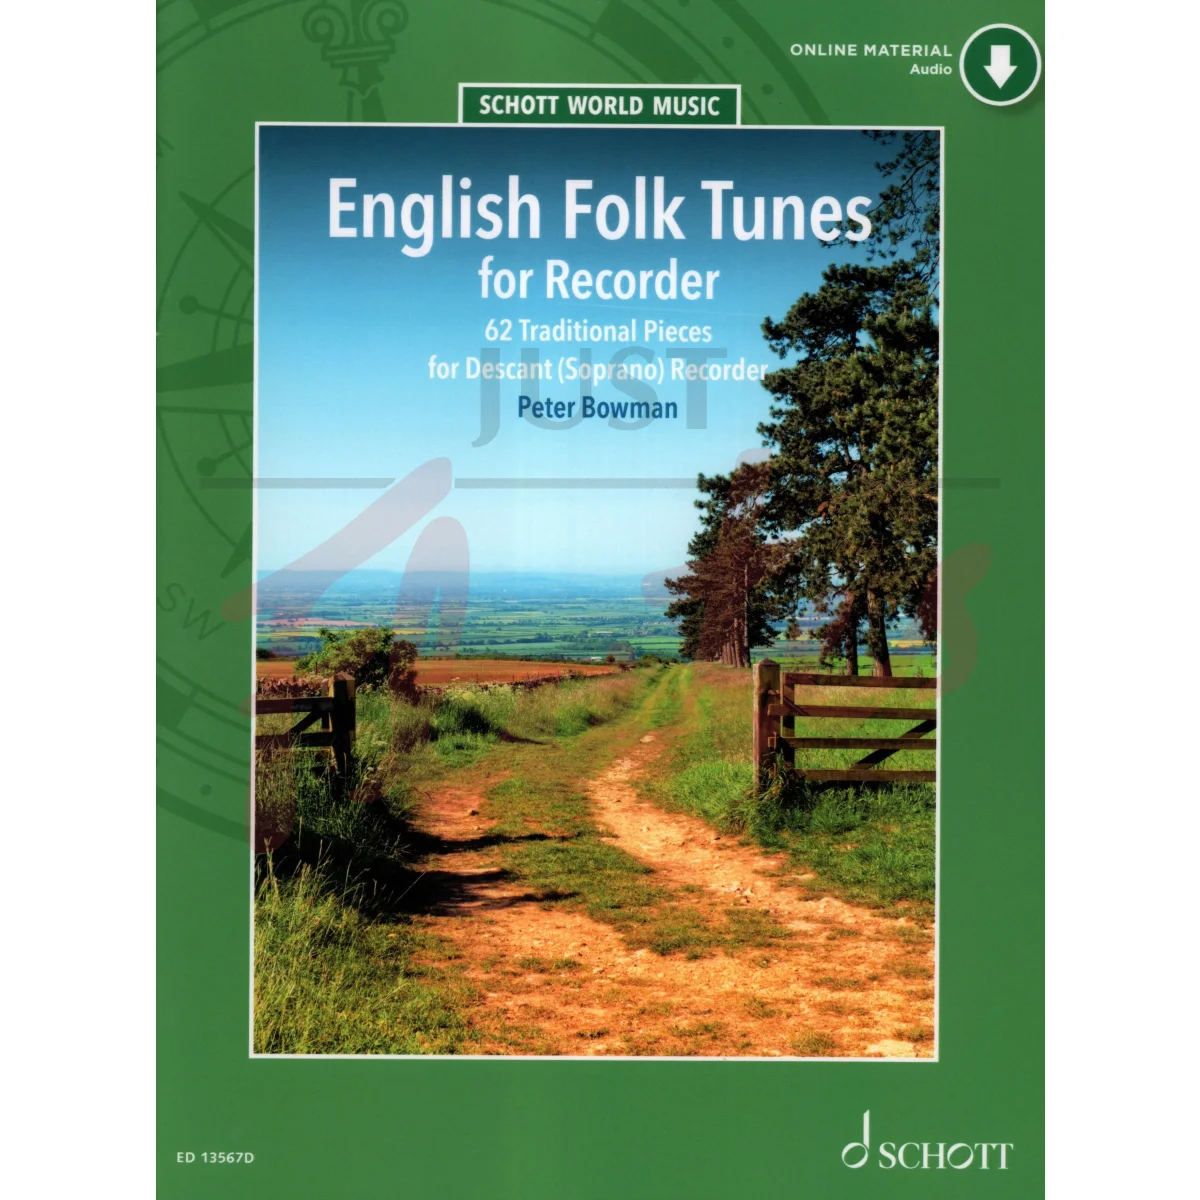 English Folk Tunes for Descant Recorder